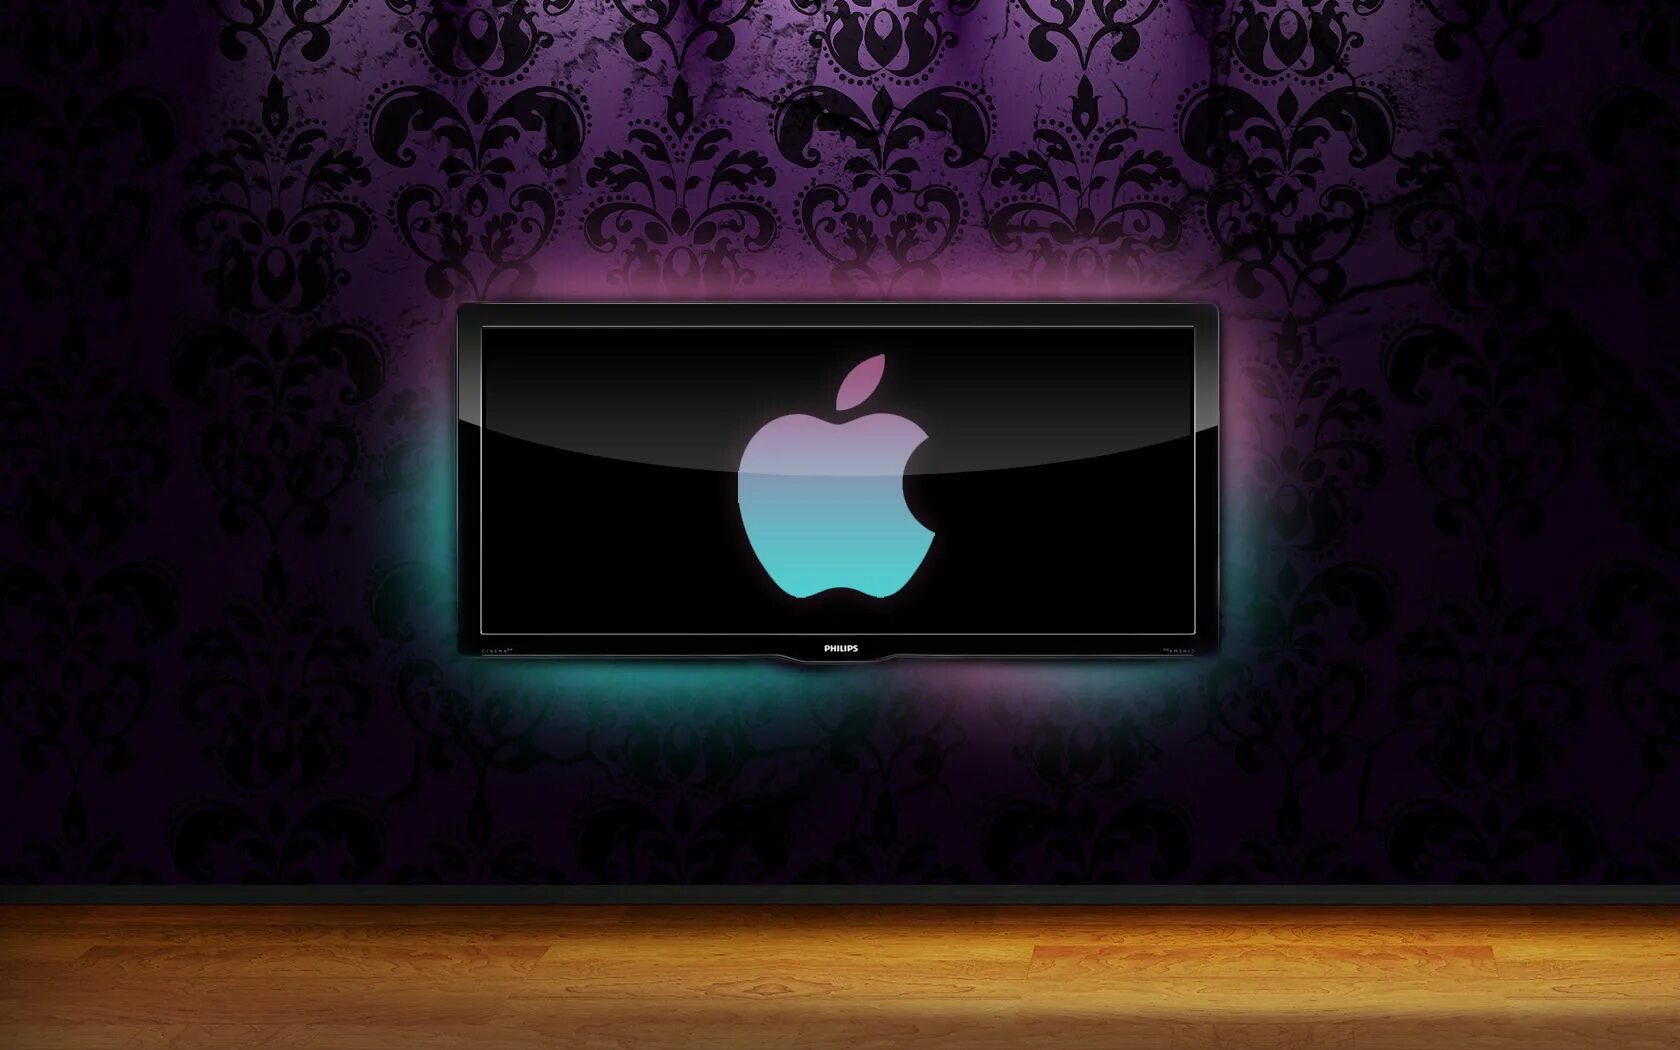 Живые обои тв. Живые обои на телевизор. Обои для андроид телевизора. Заставка на экран ноутбука. Обои Apple TV.